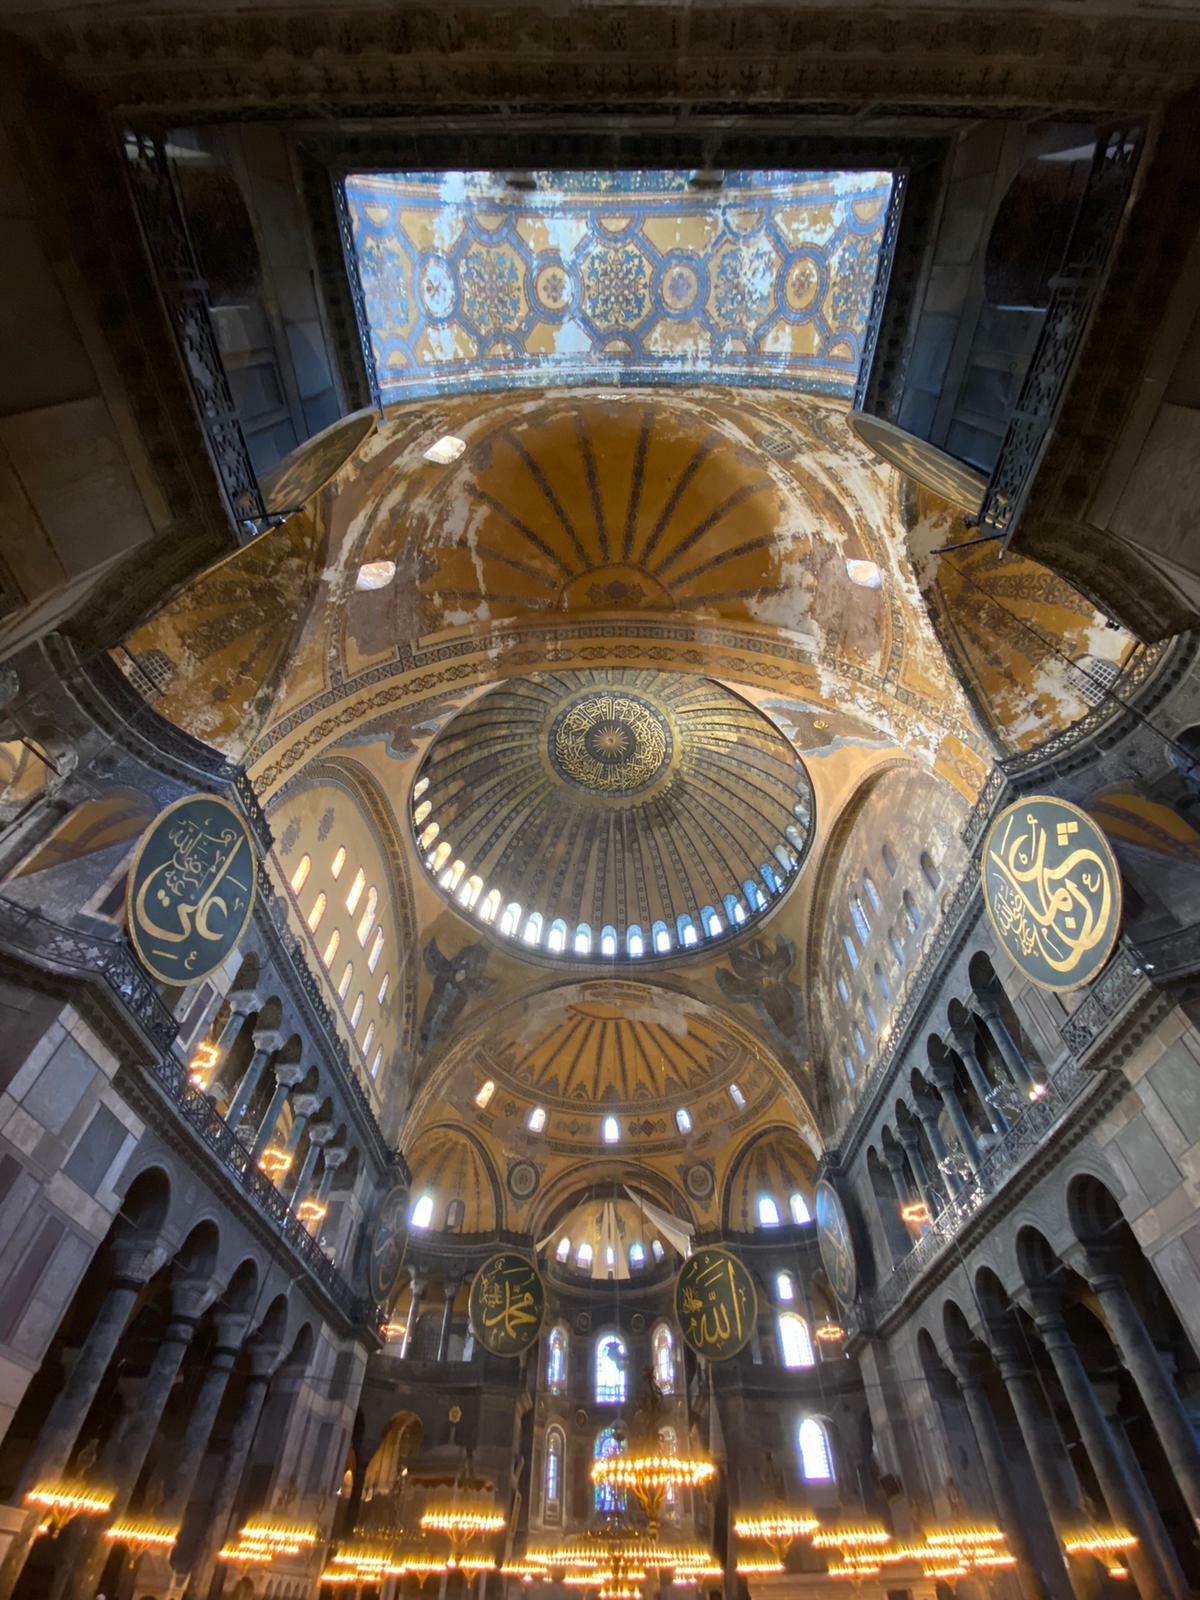 A Spellbinding Ceiling - Hagia Sophia, Istanbul